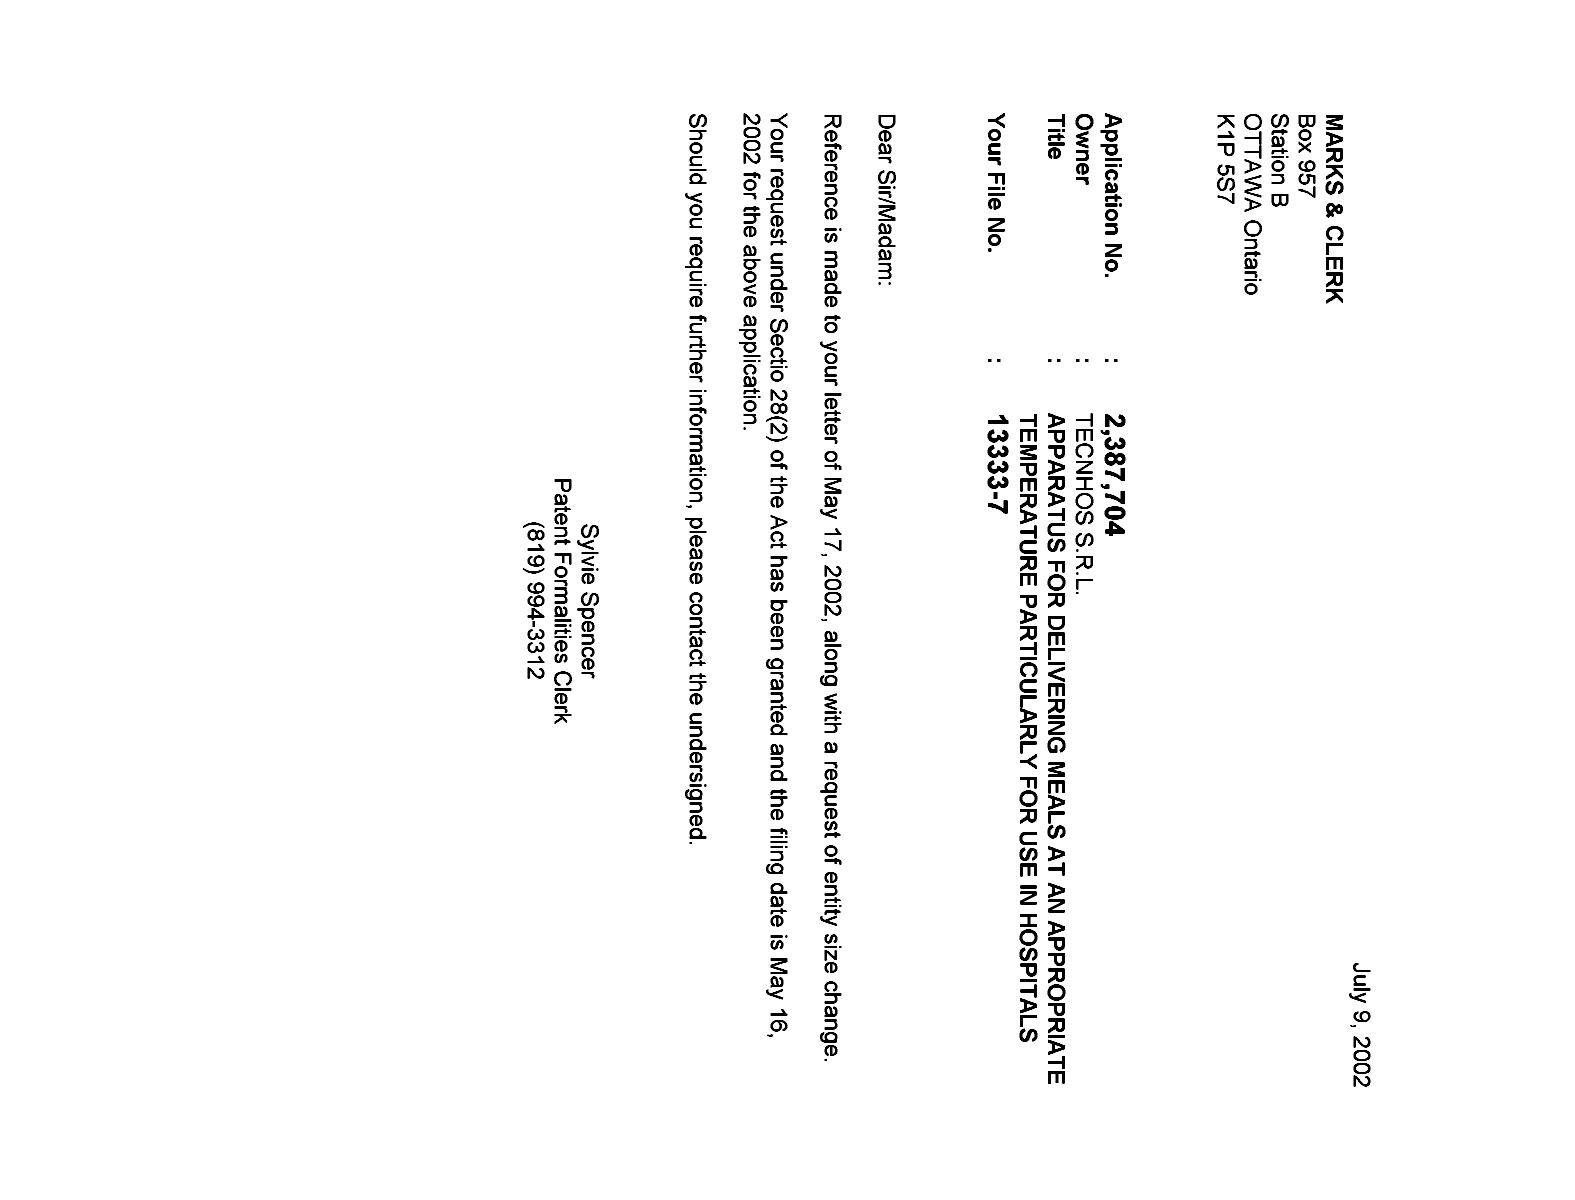 Canadian Patent Document 2387704. Correspondence 20020705. Image 1 of 1